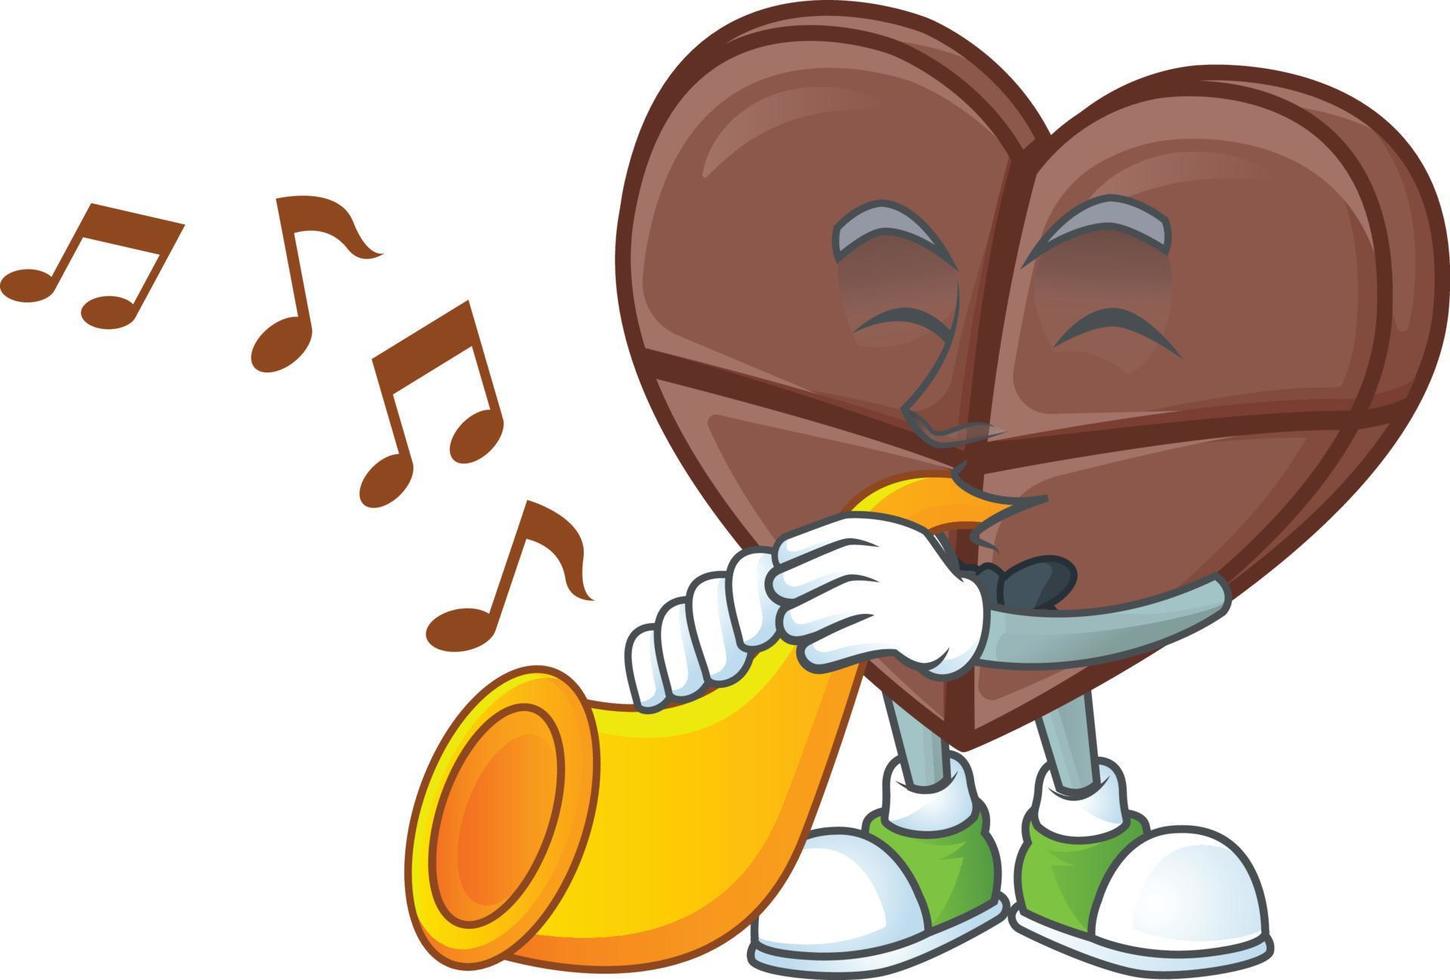 Chocolate bar love cartoon character style vector